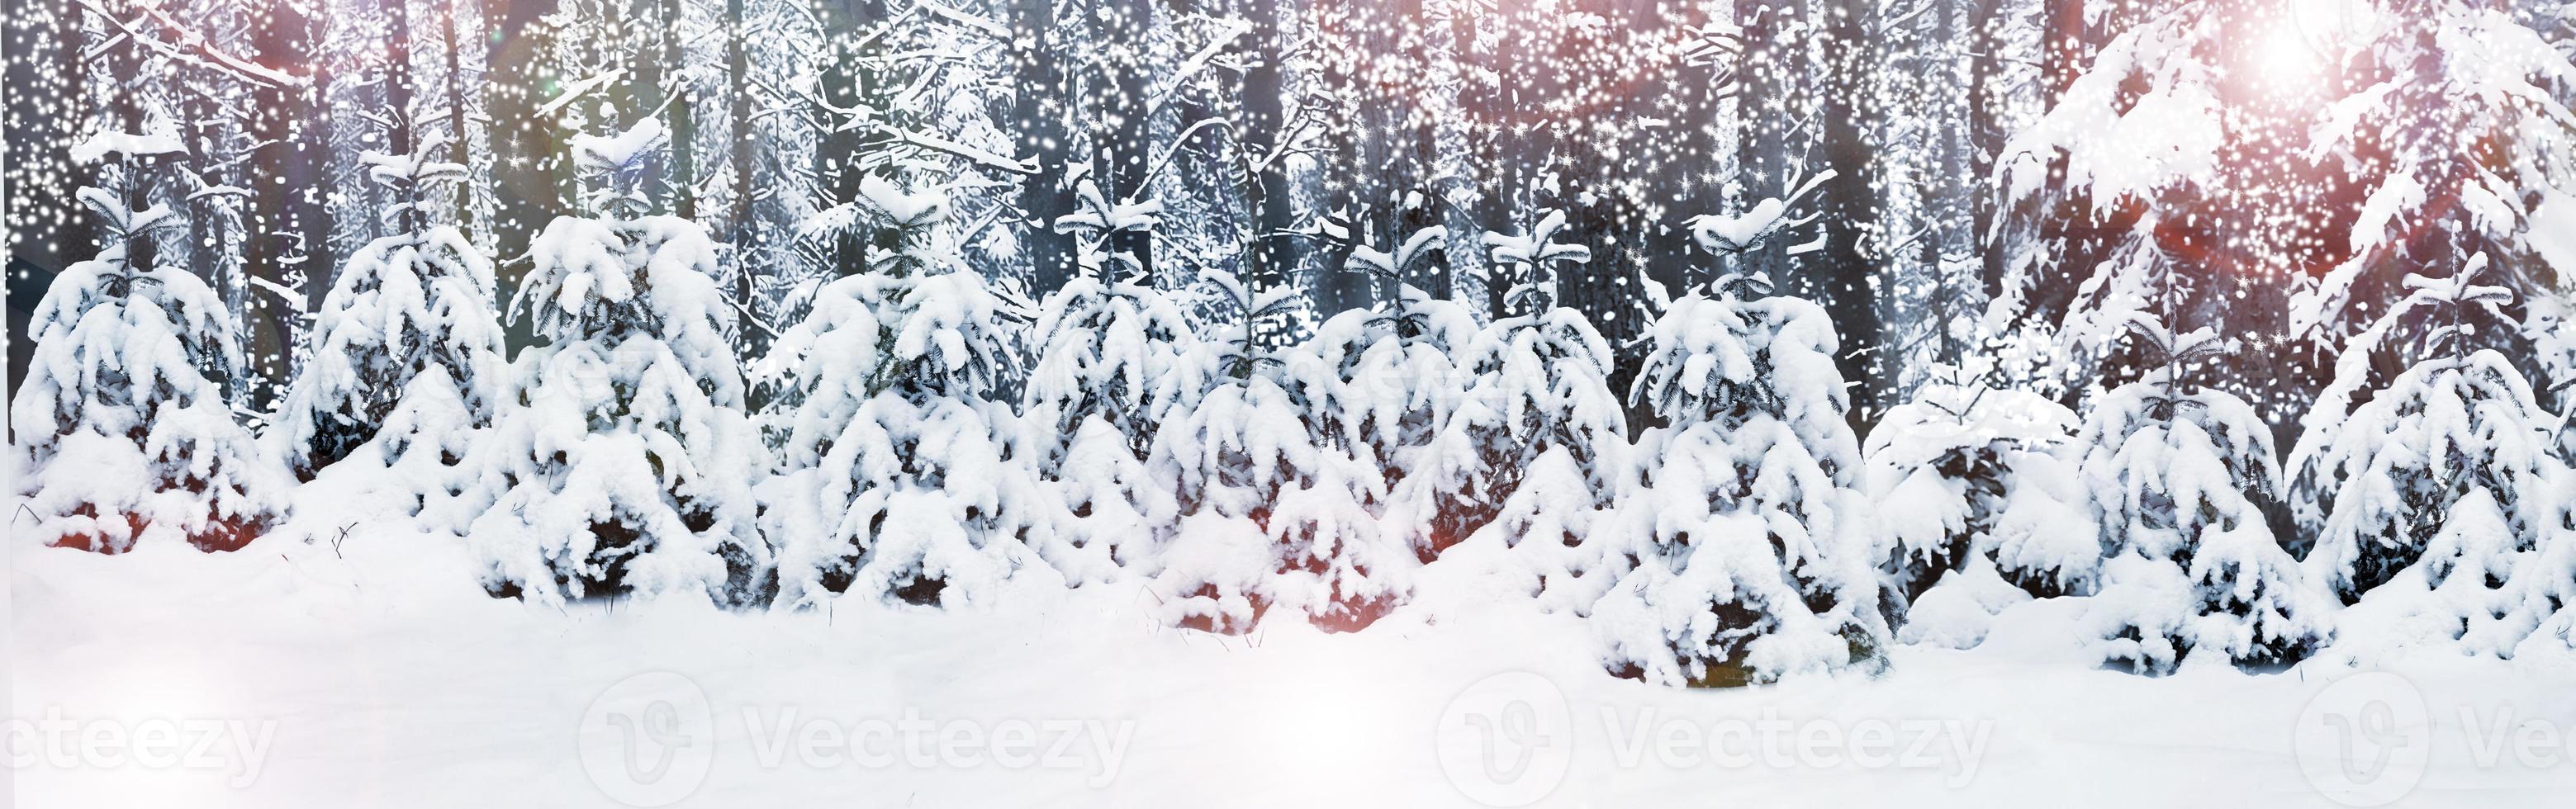 Winter. Snowfall. Christmas card. photo